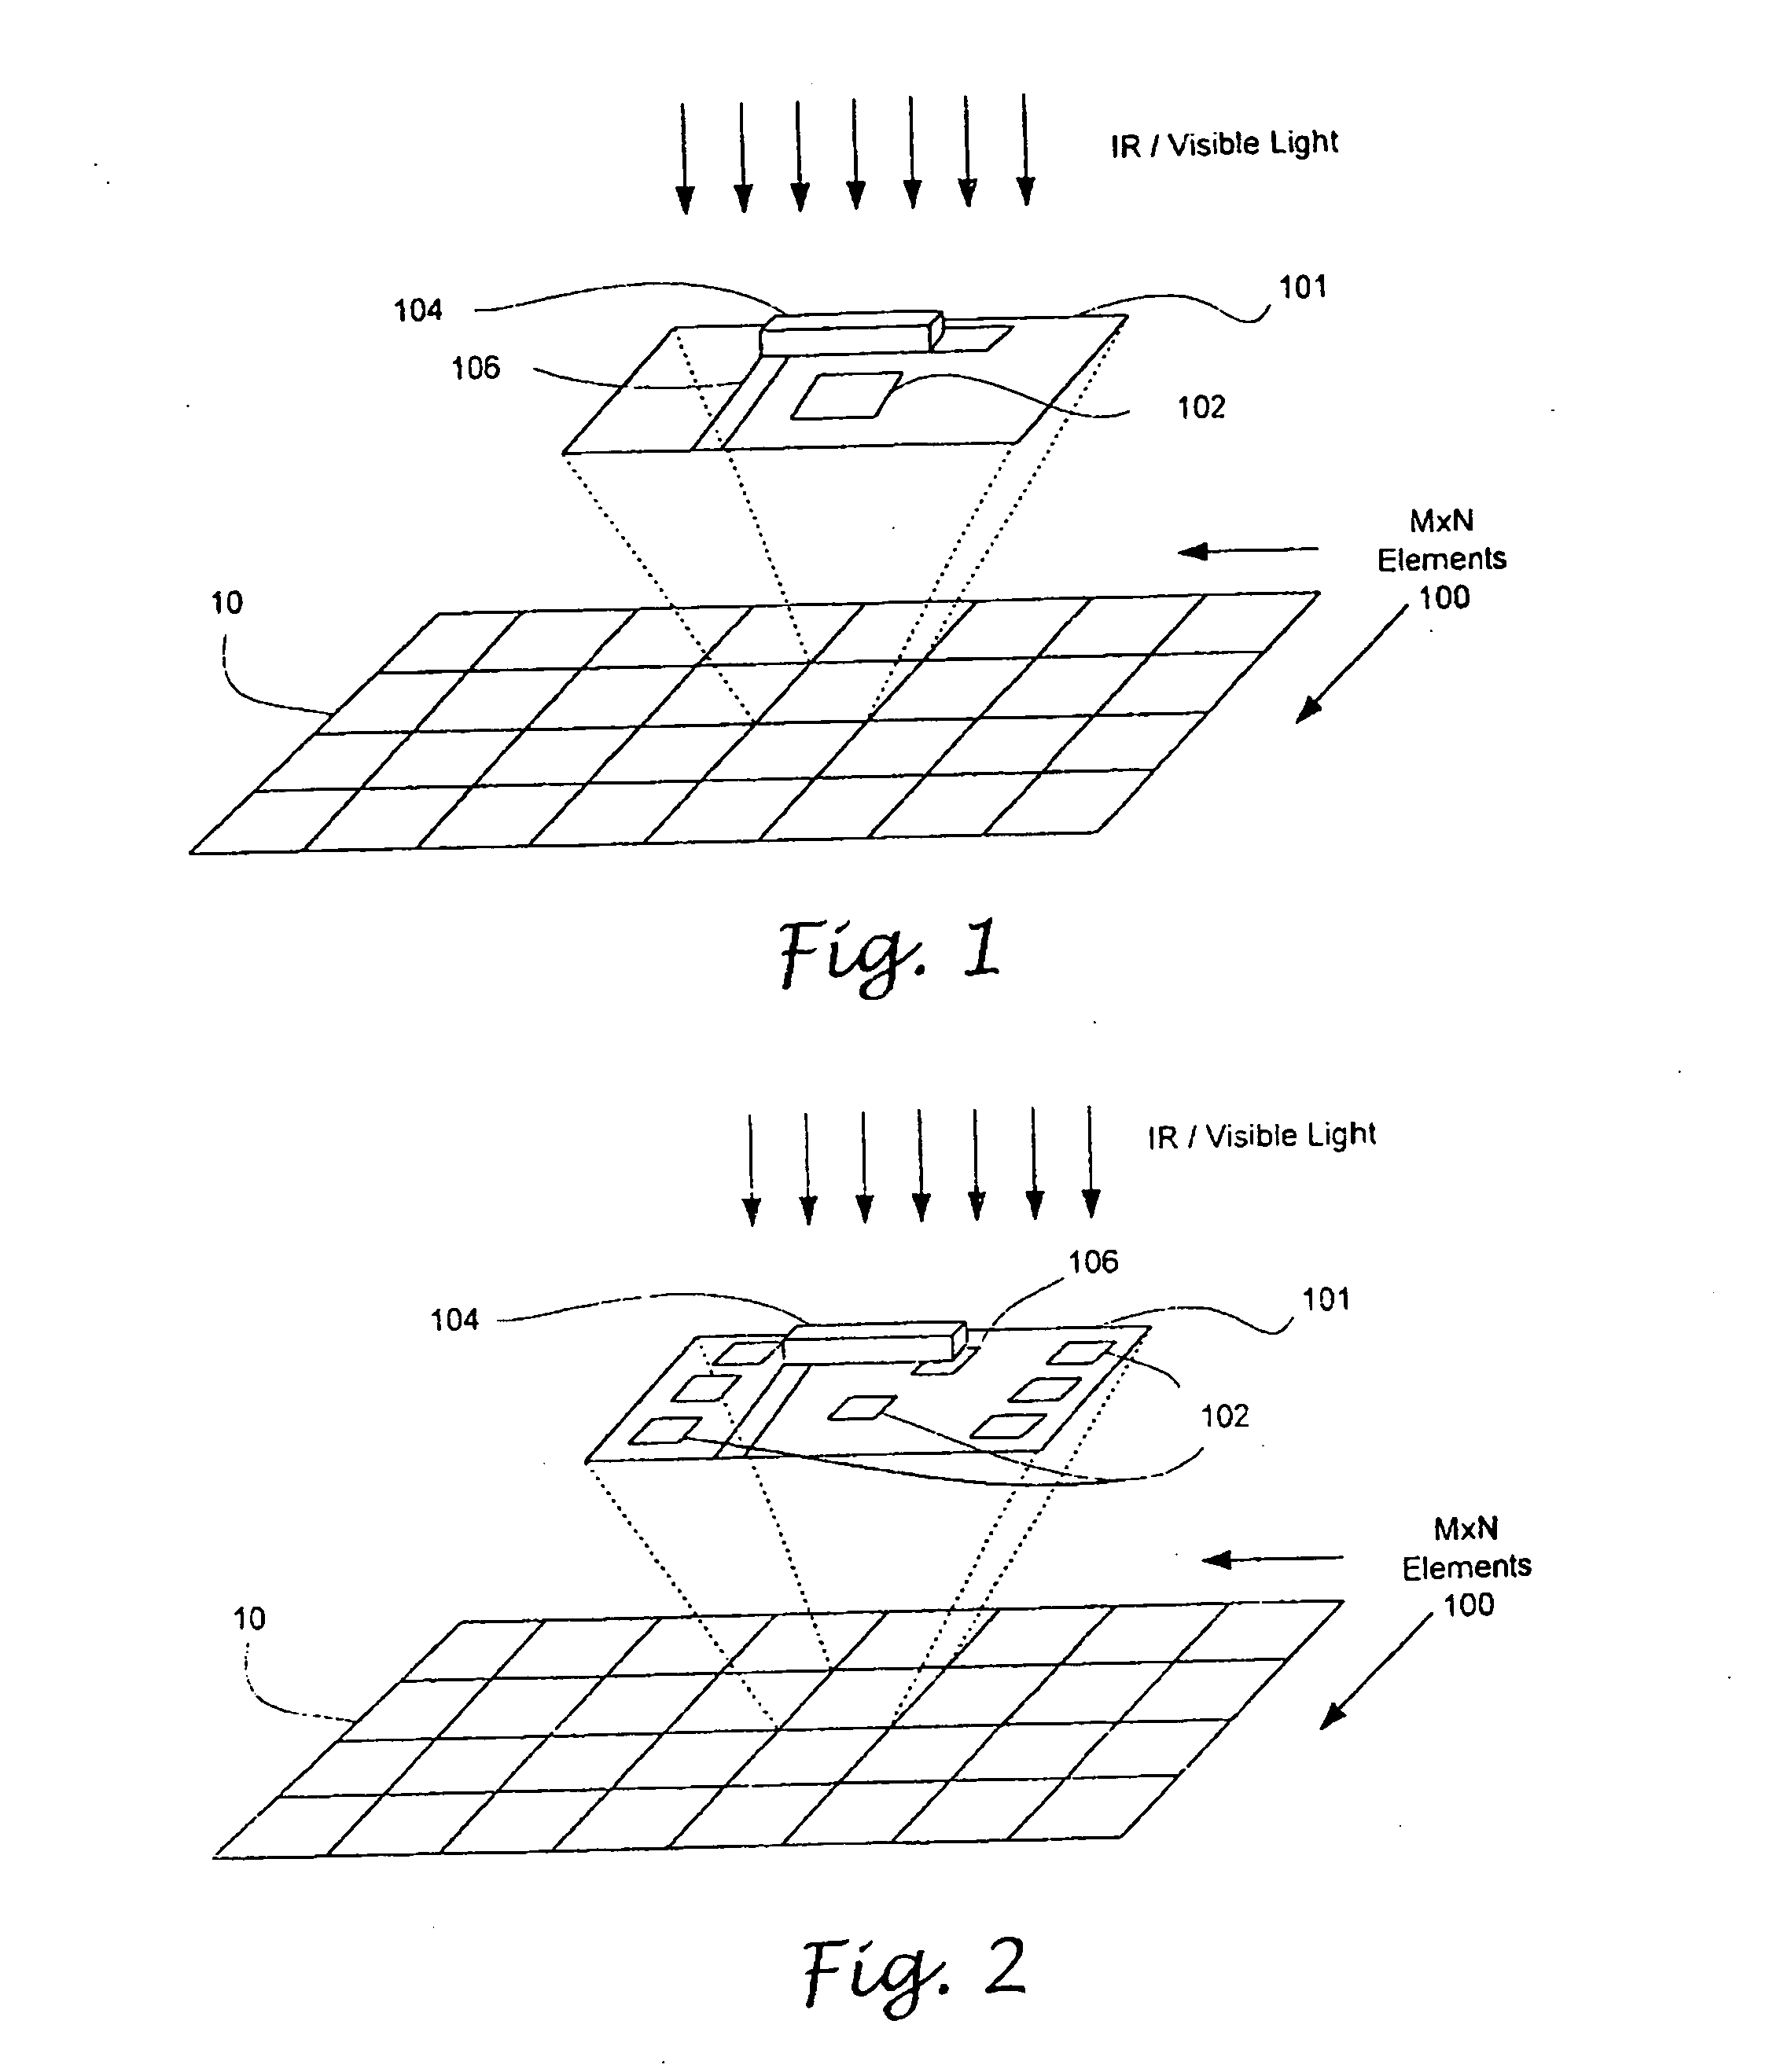 Multi-band focal plane array